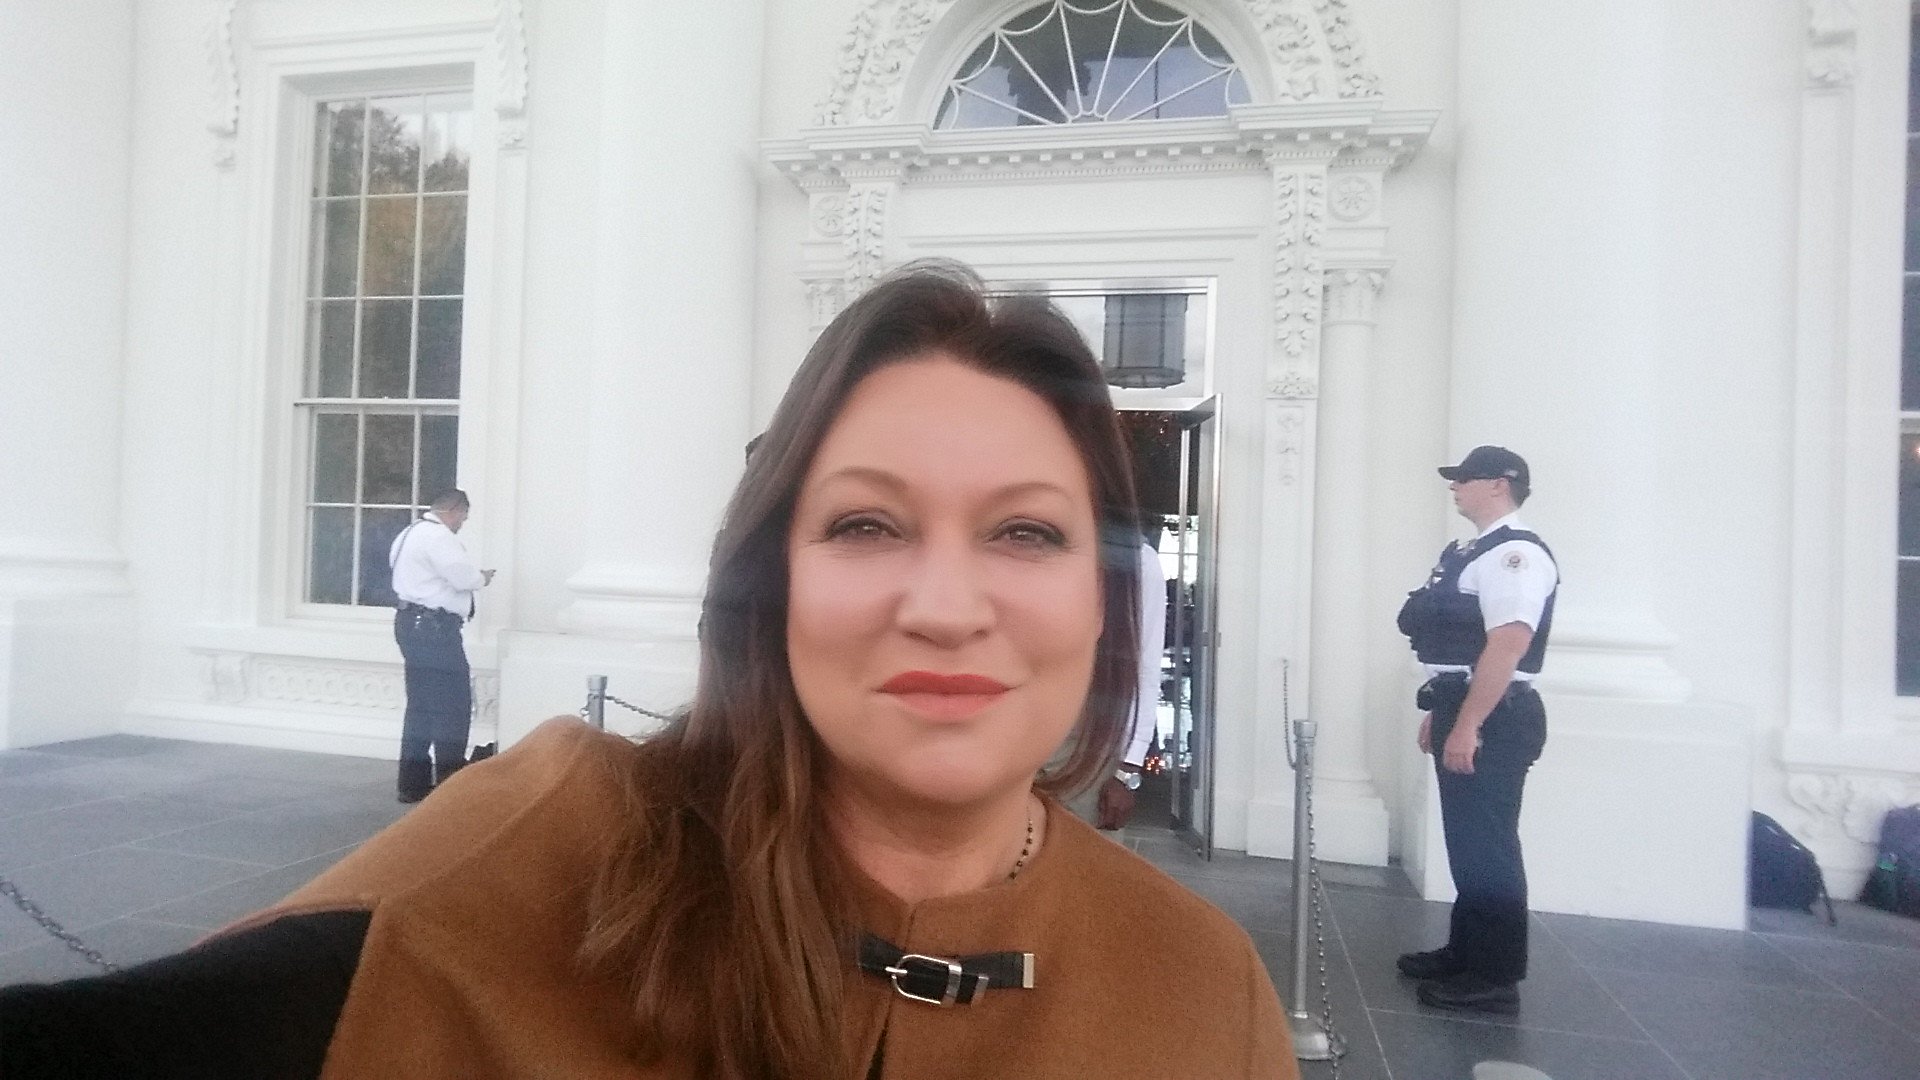 Norah outside the White House